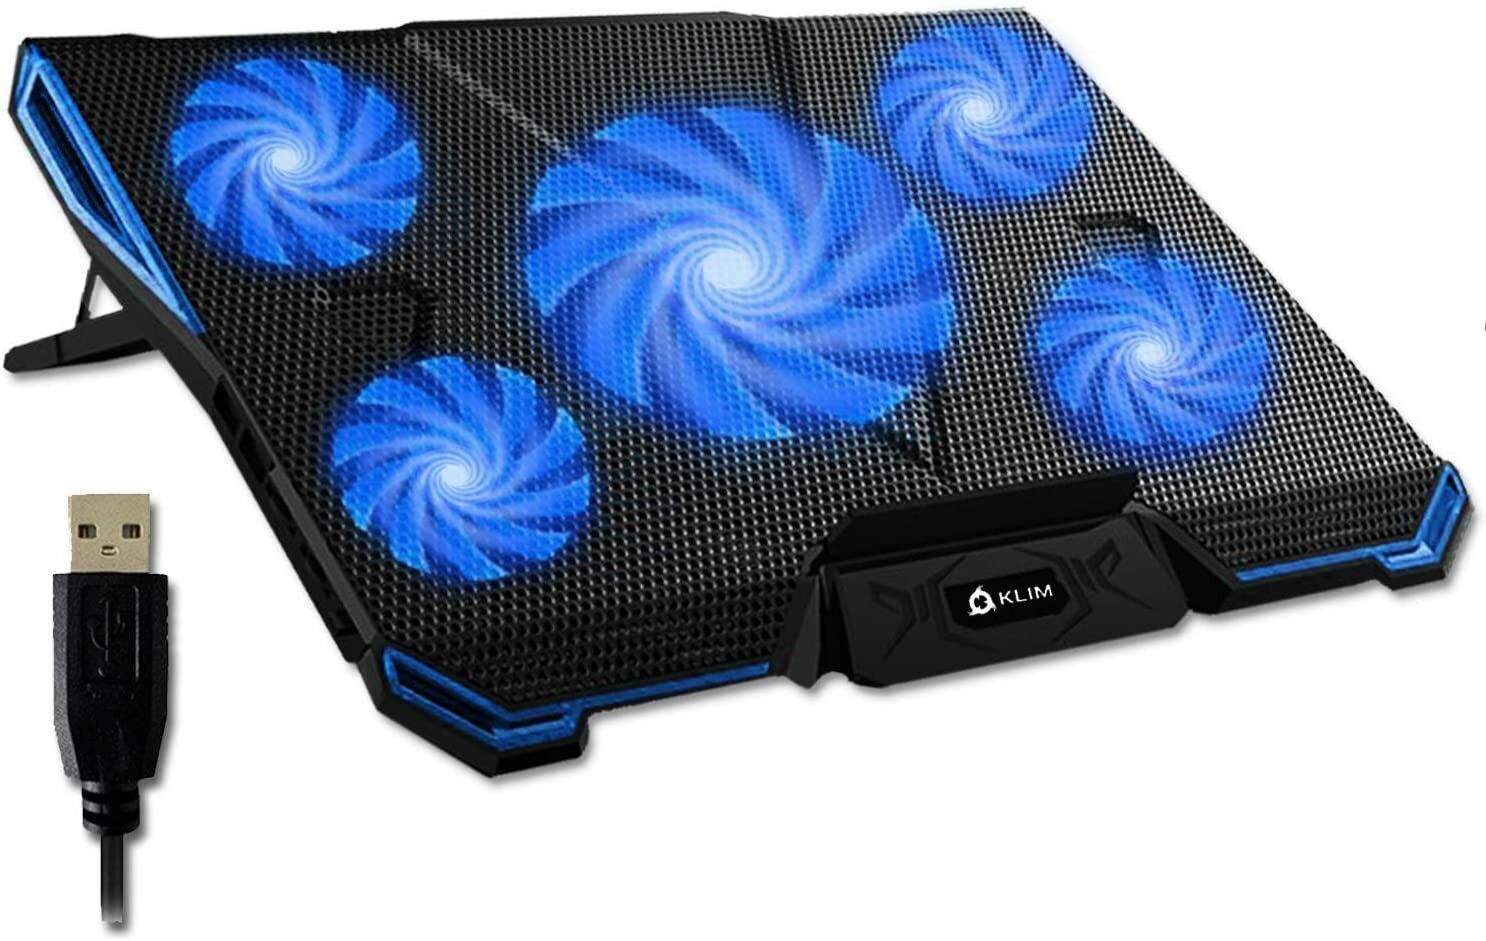 KLIM Cyclone Laptop Cooling Pad & Stand, 5 Fan Notebook Cooler, Blue LED Backlit KLIM B01MU2T4F6